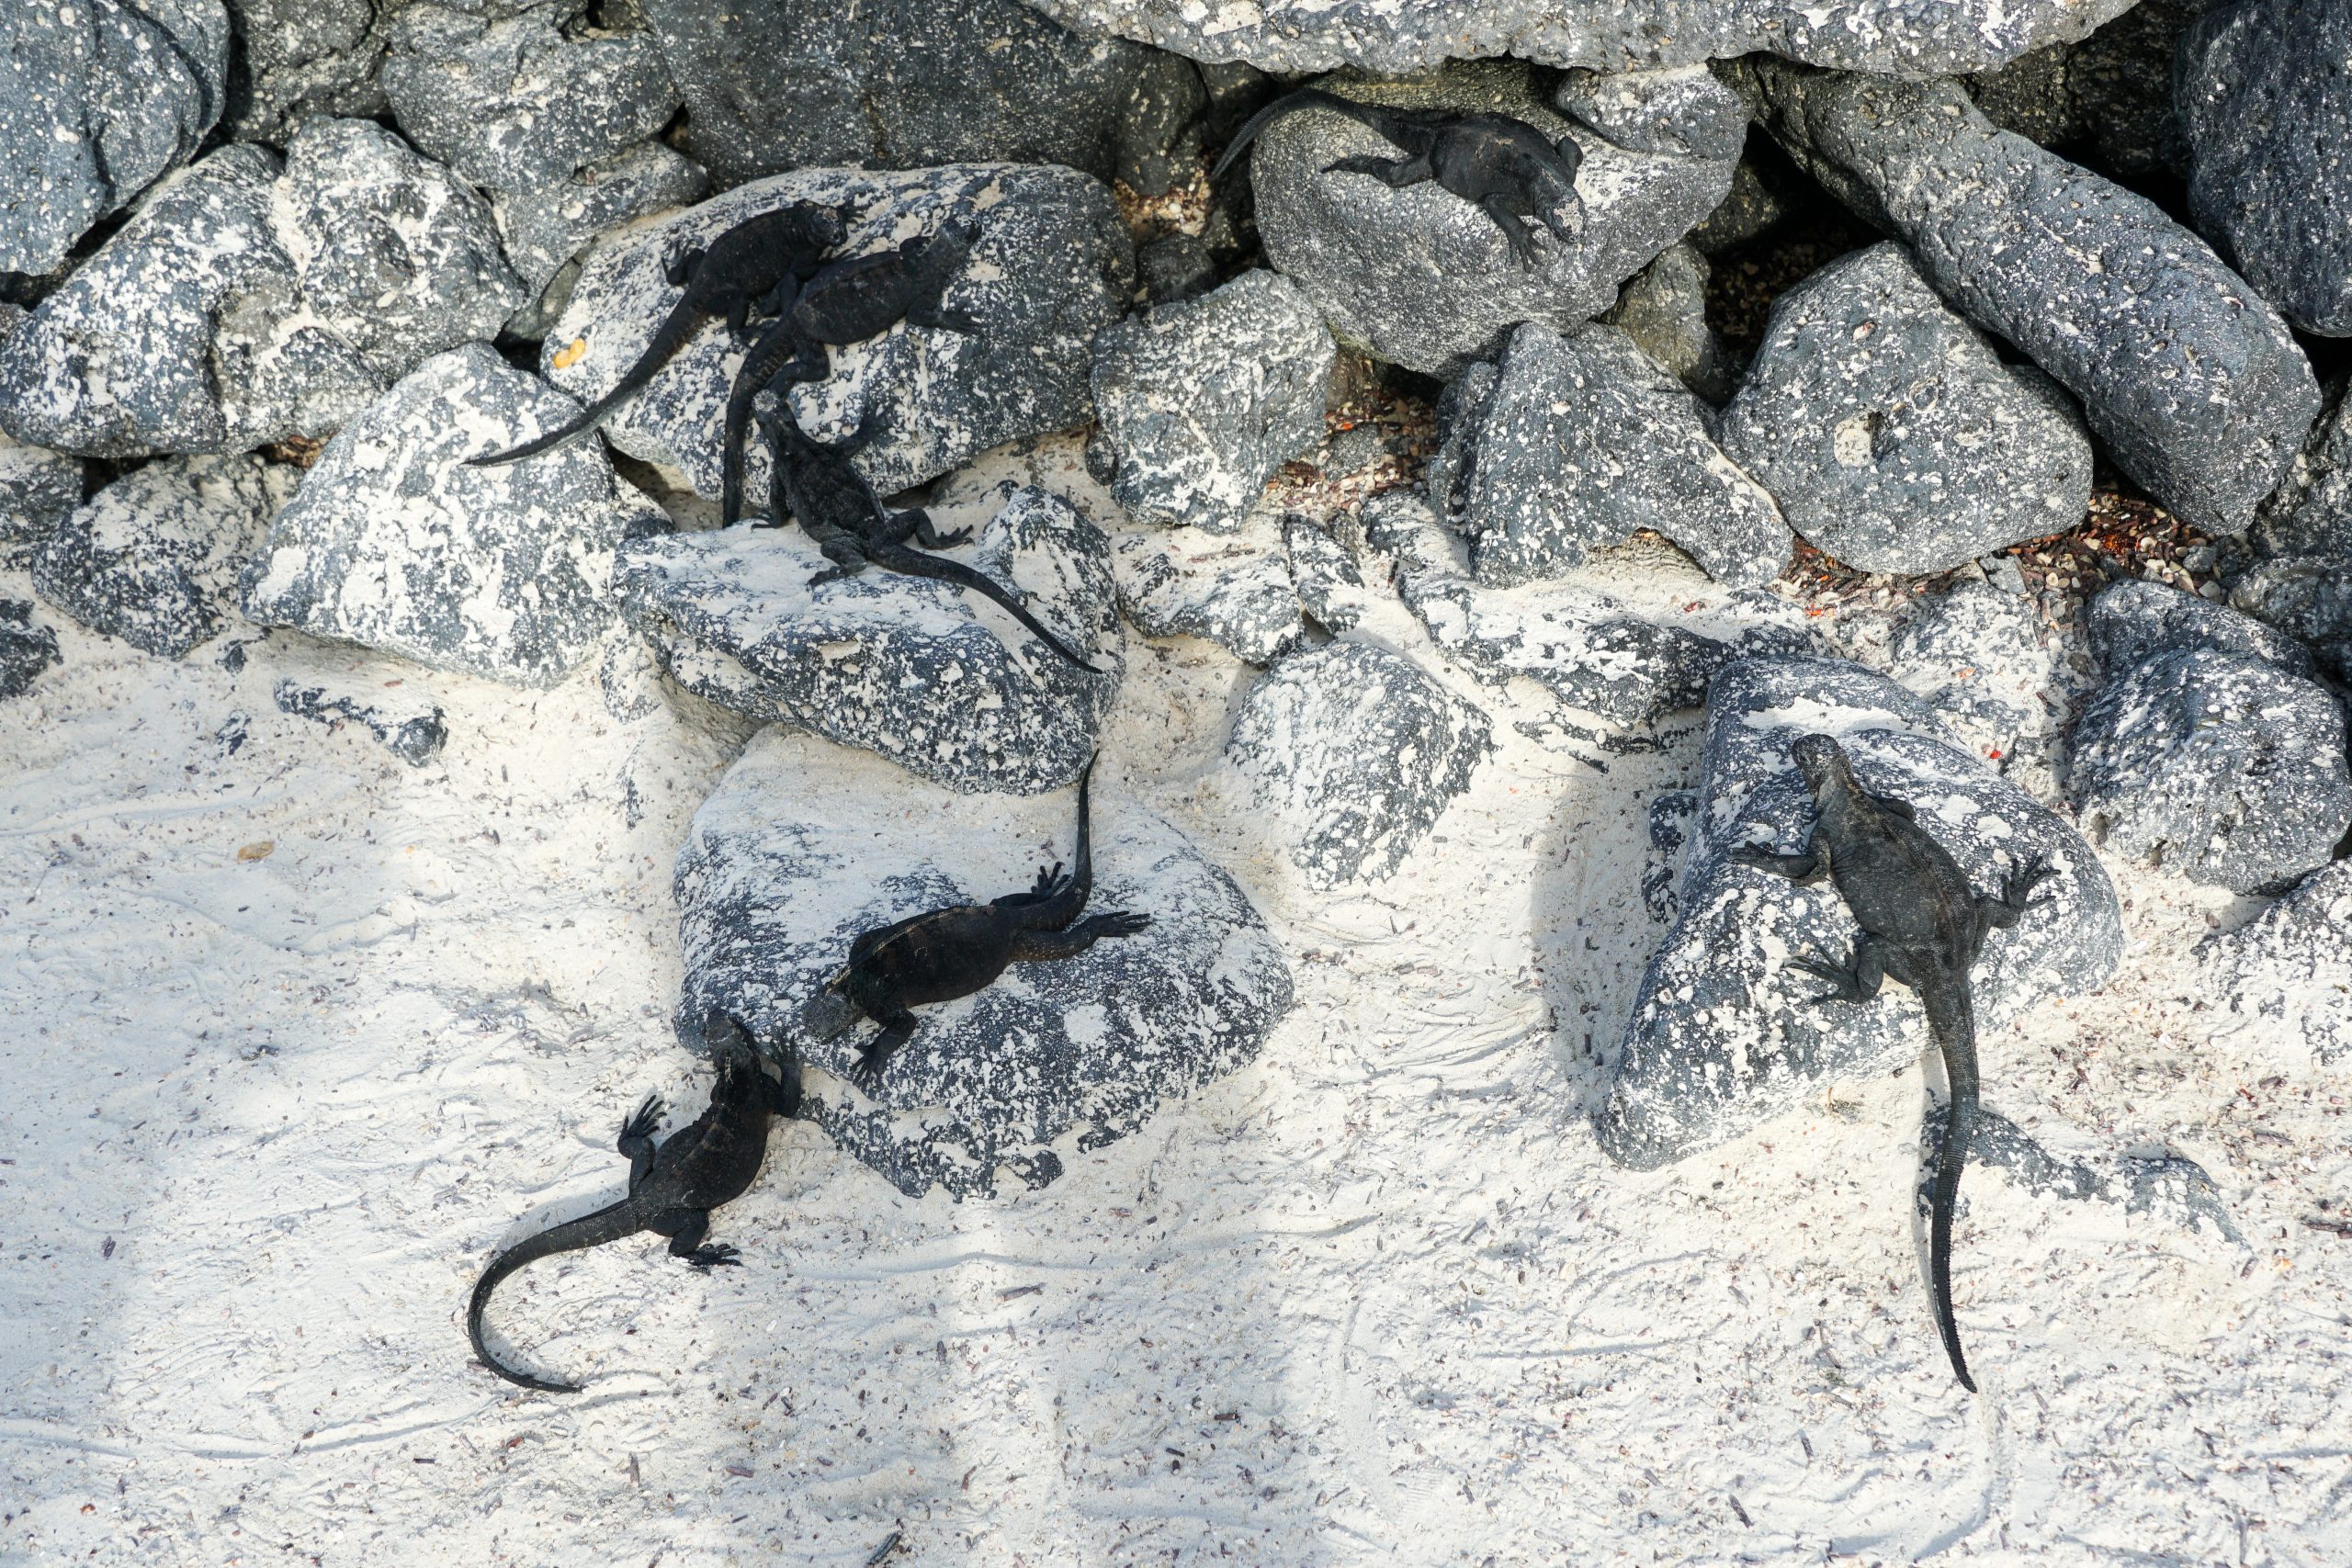 Multiple galapagos lizards sunbathing on rocks